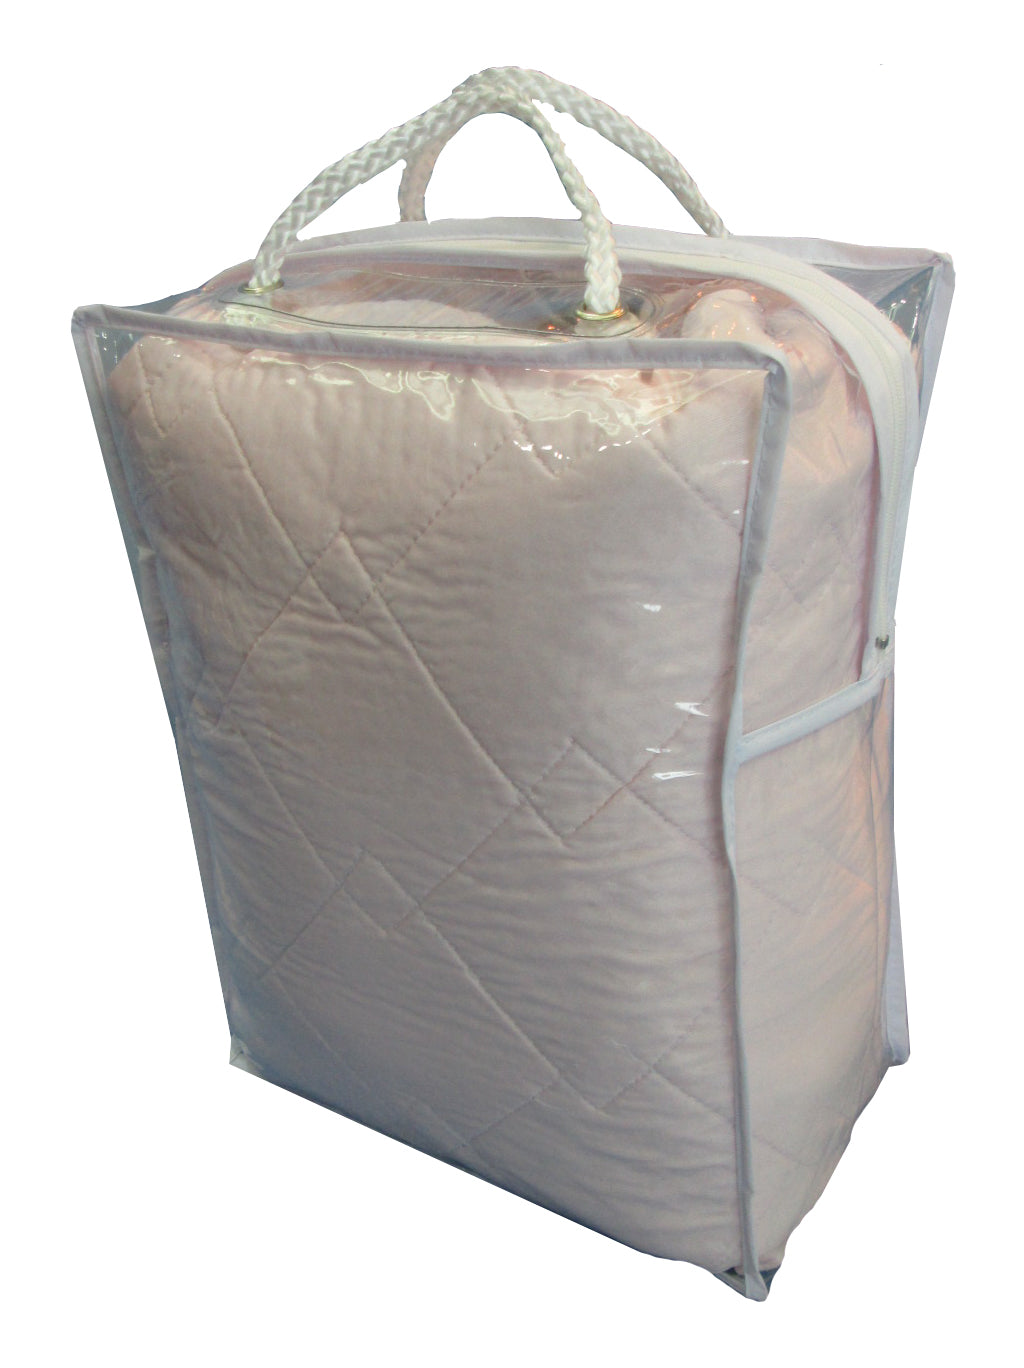 JLSB-0005 Sewn Bag